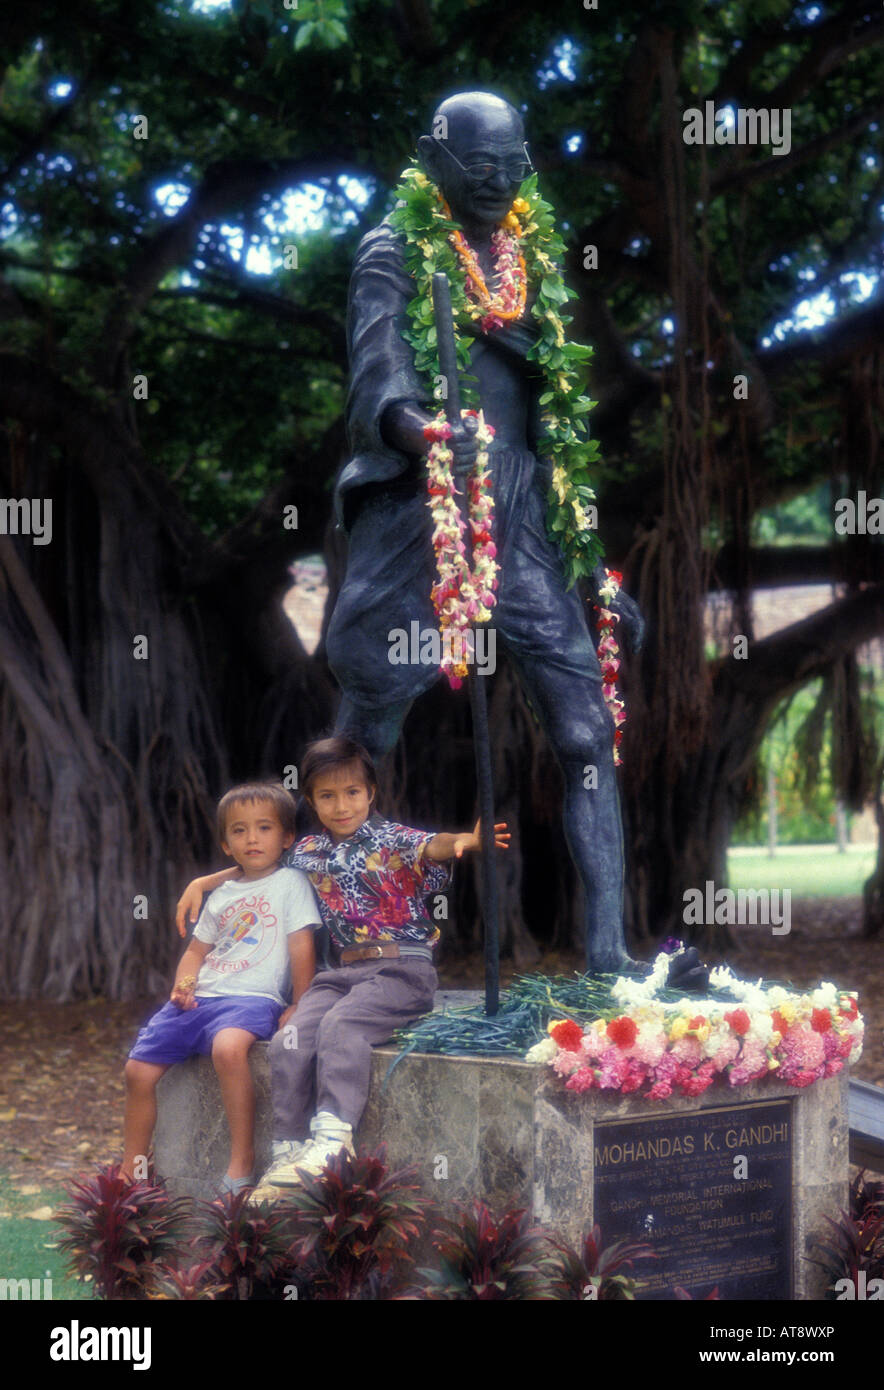 Kids with the Mohandas Gandhi statue in Waikiki, located near the Honolulu zoo. Stock Photo